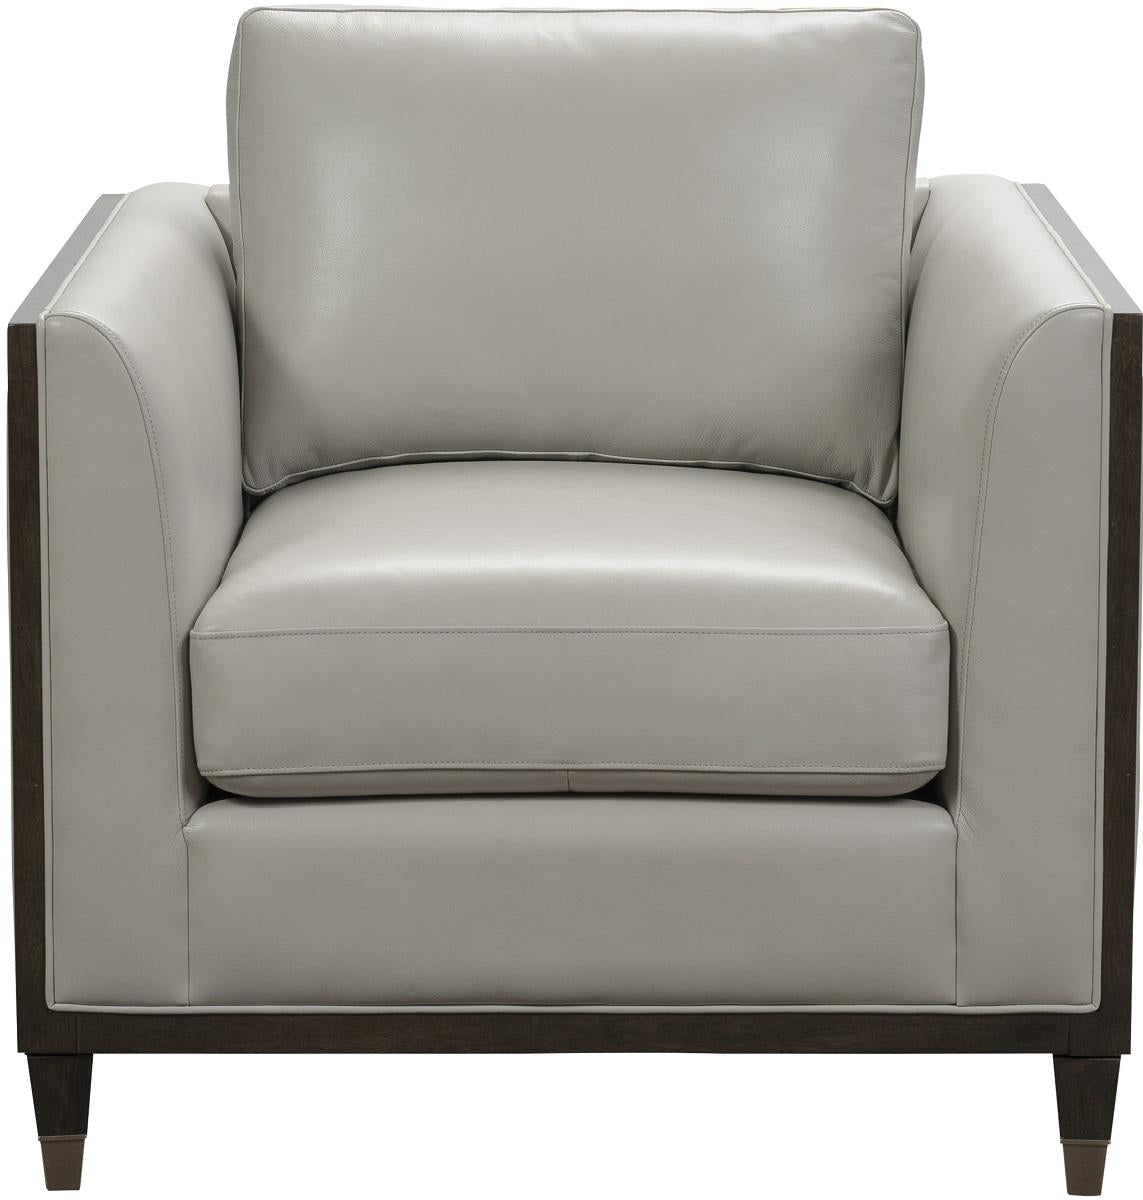 Pulaski Addison Leather Chair in Light Grey image